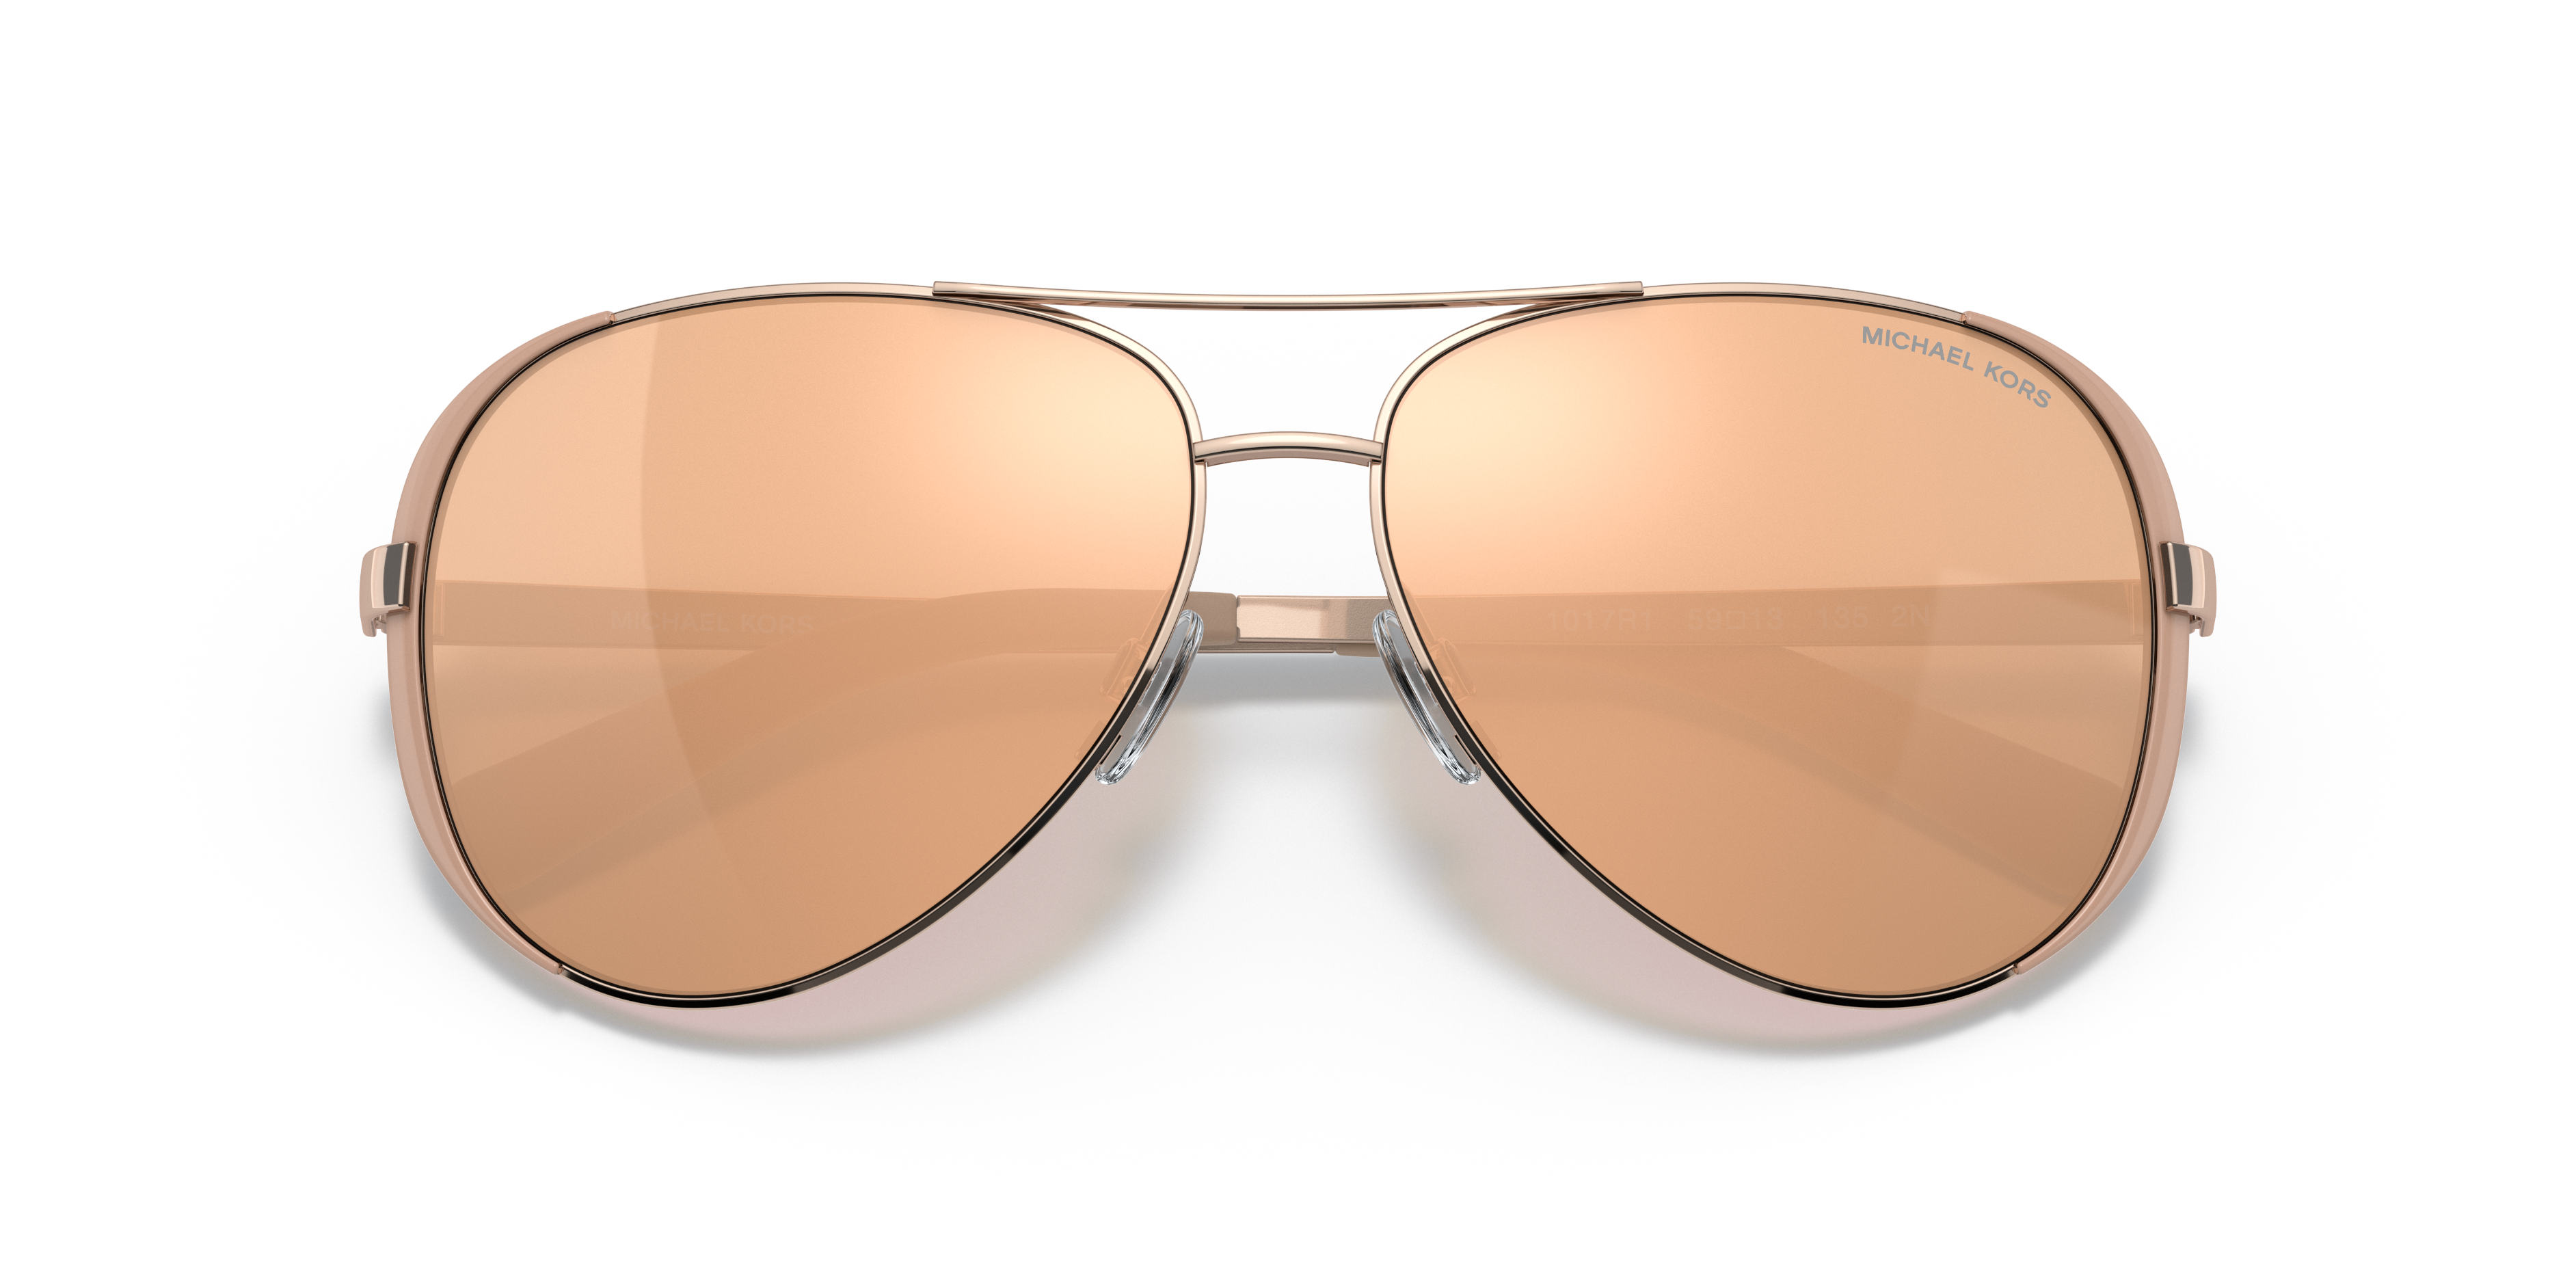 Michael Kors MK5004 Chelsea Aviator Polarized Sunglasses Gold wBrown  Gradient 725125941907  eBay